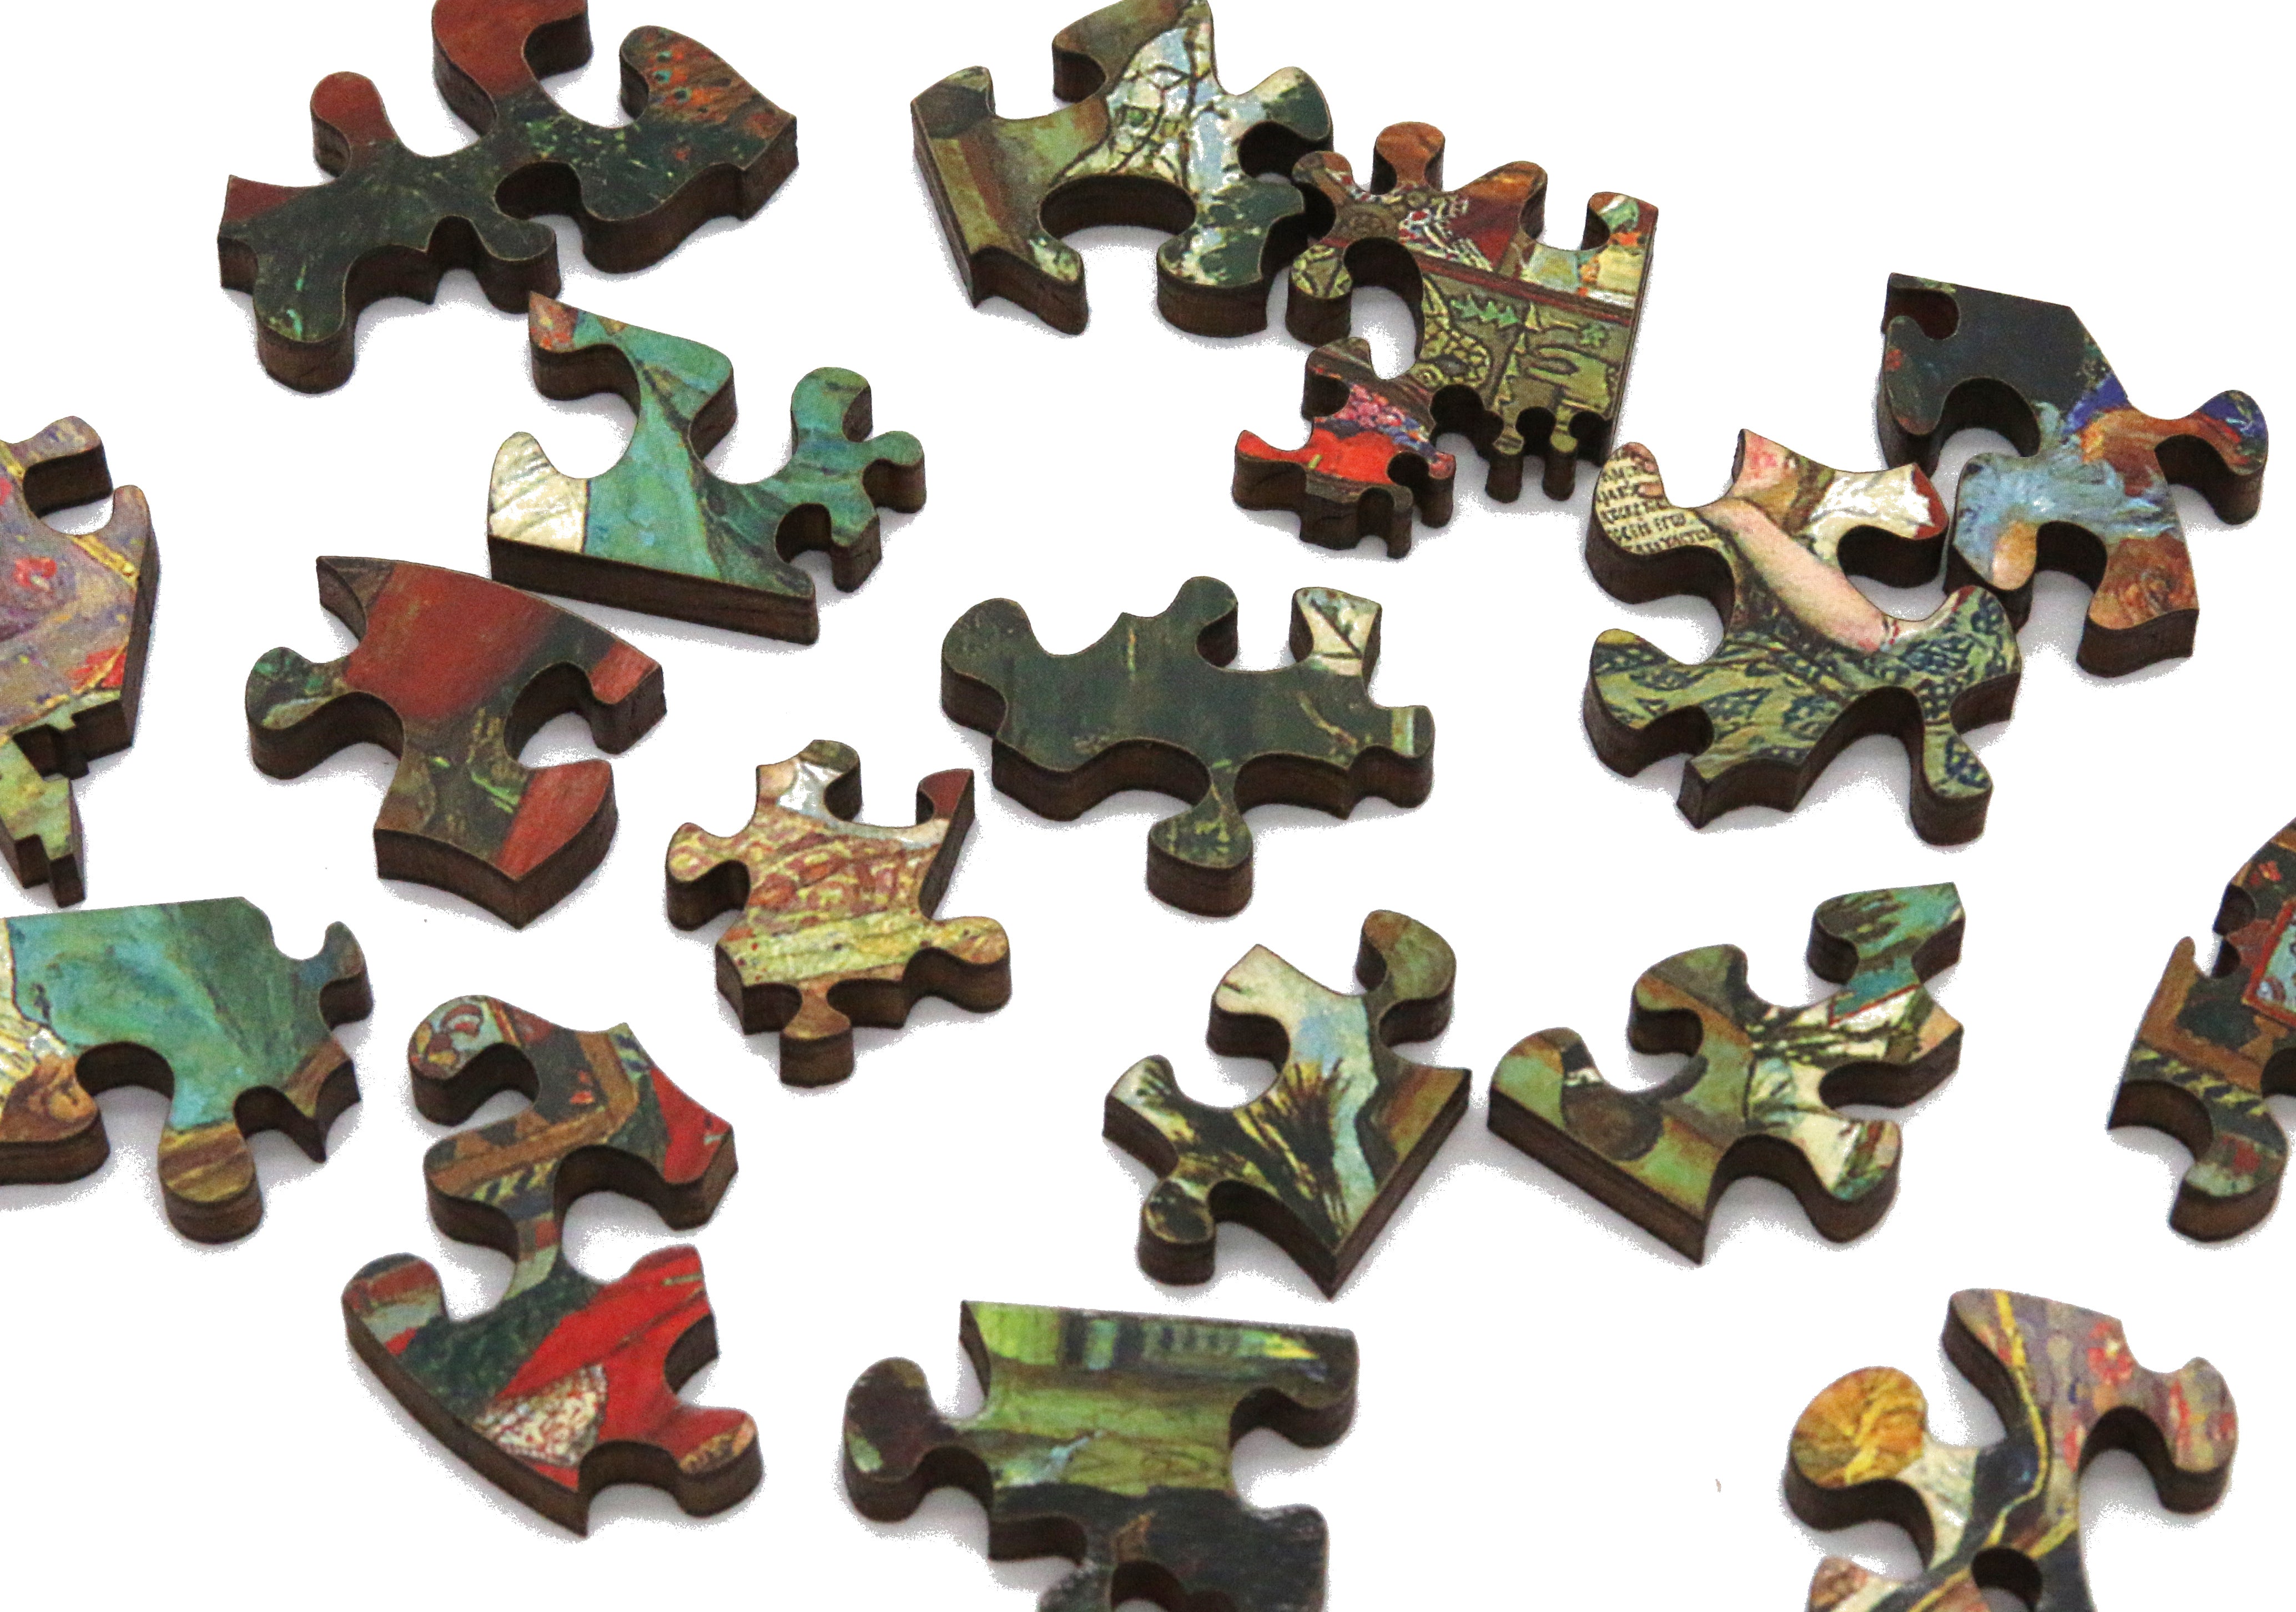 Artifact Puzzles - Sleeping Princess Wooden Jigsaw Puzzle